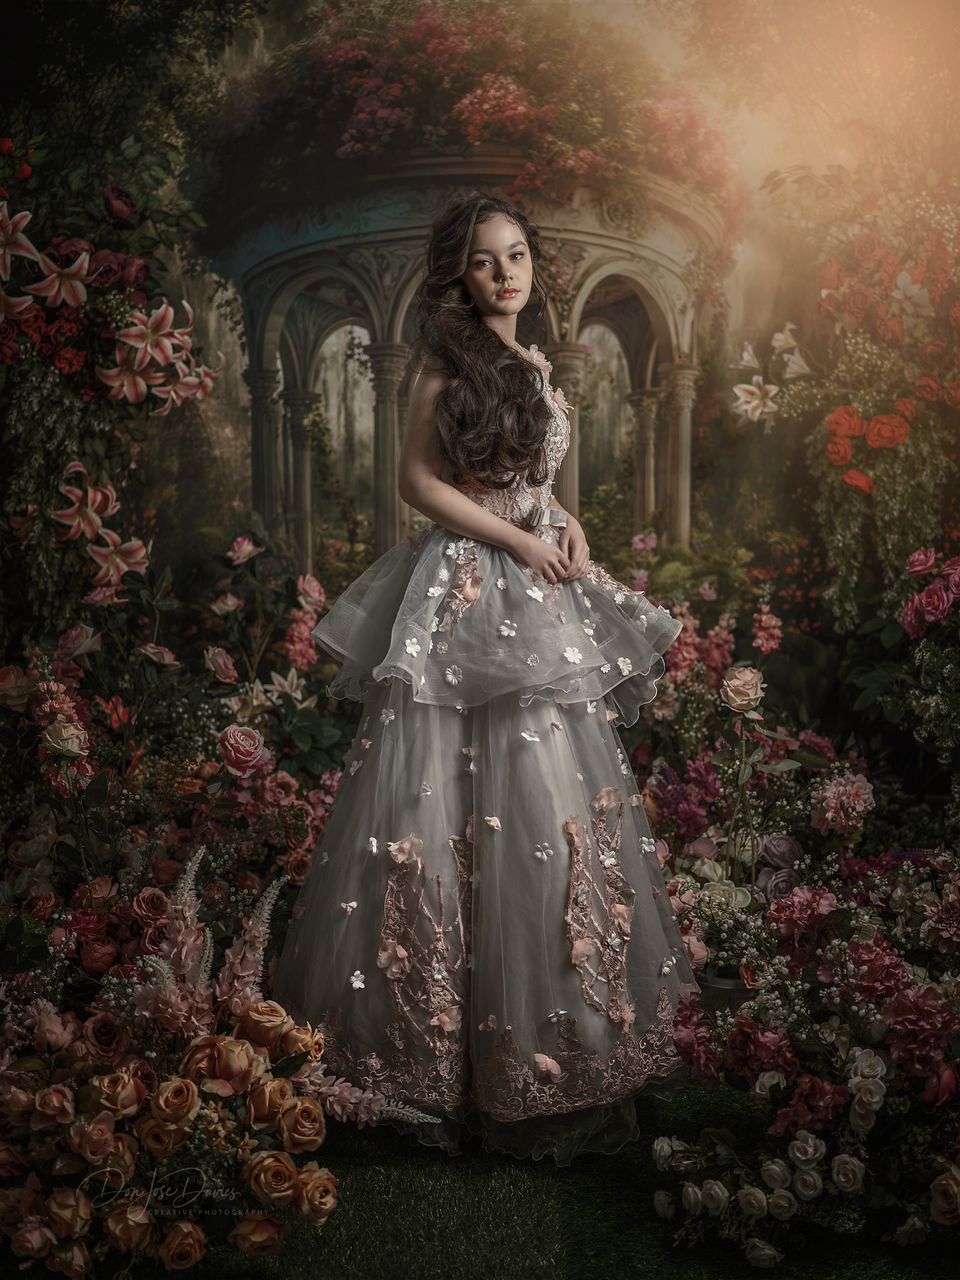 Kate Enchanted Gazebo Spring Fantasy Garden Hintergrundkulisse von Candice Compton